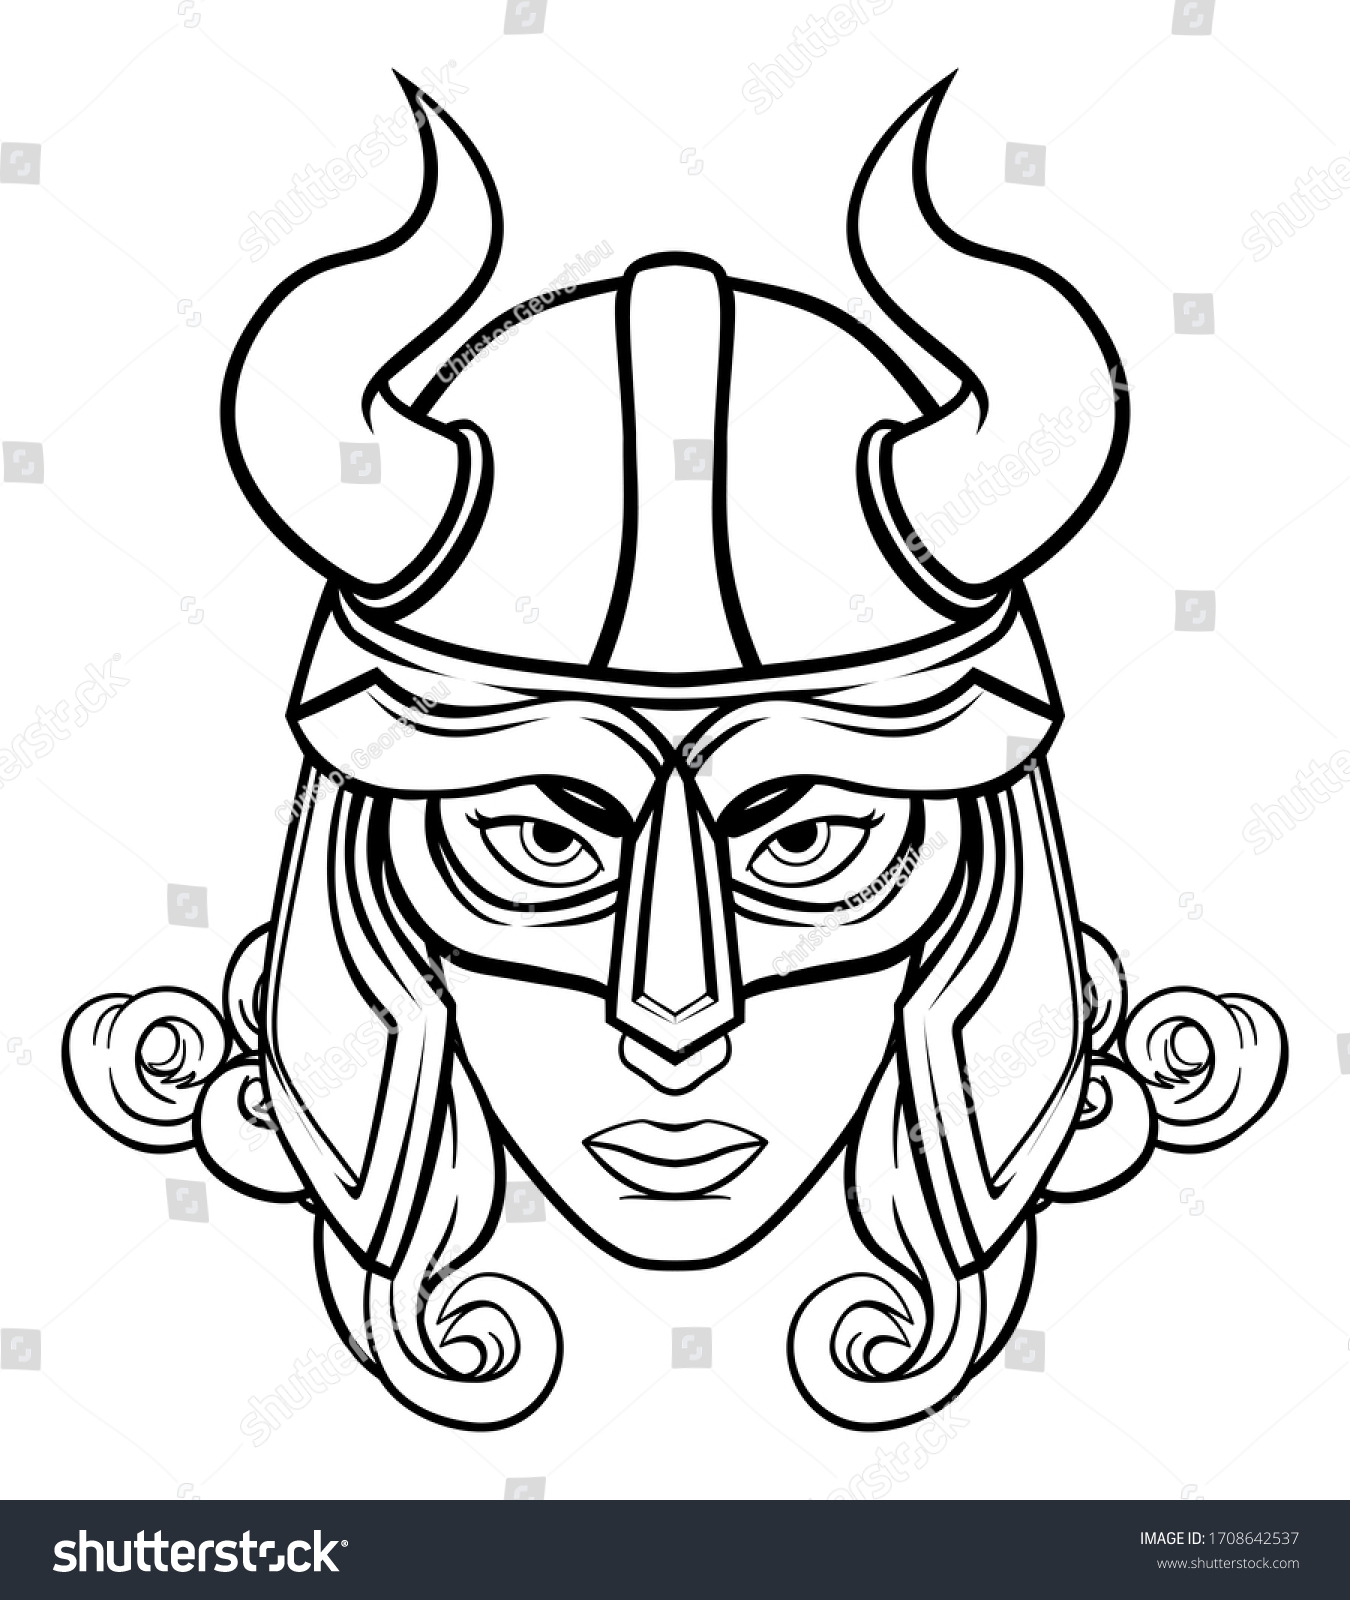 Mean Looking Viking Woman Warrior Cartoon Stock Illustration 1708642537 ...